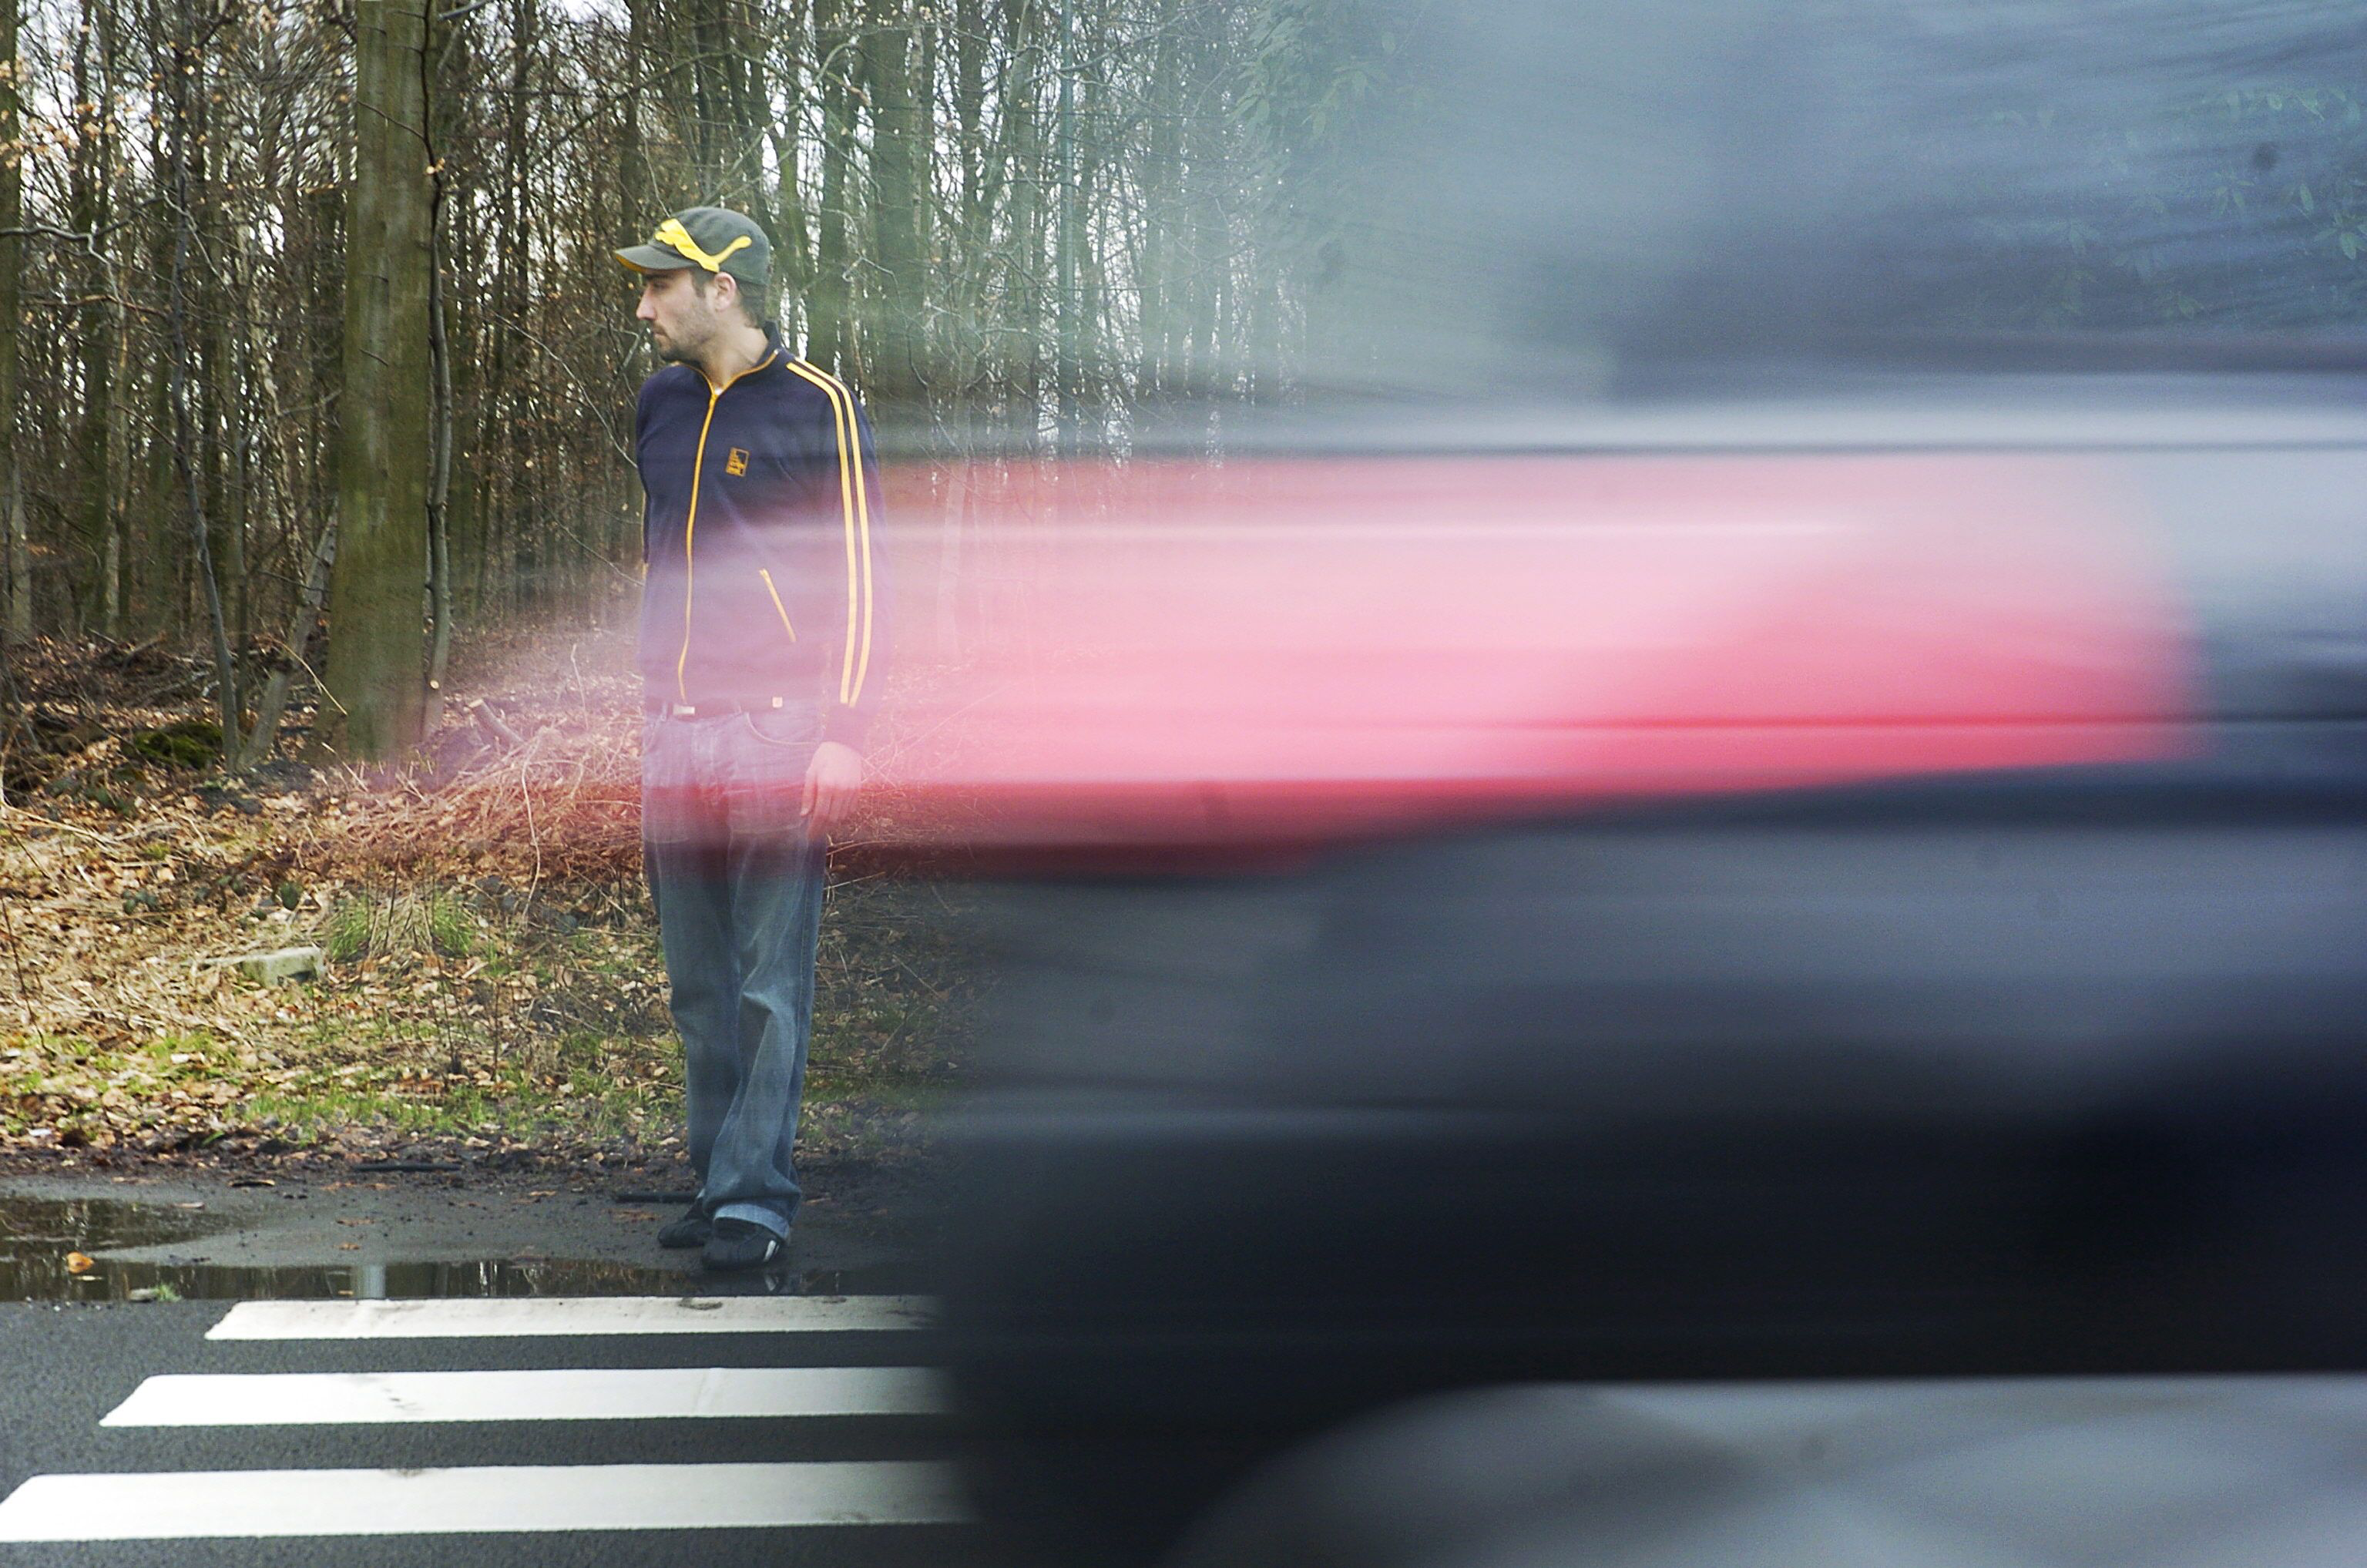 Flanders: increase in road fatalities, especially among pedestrians